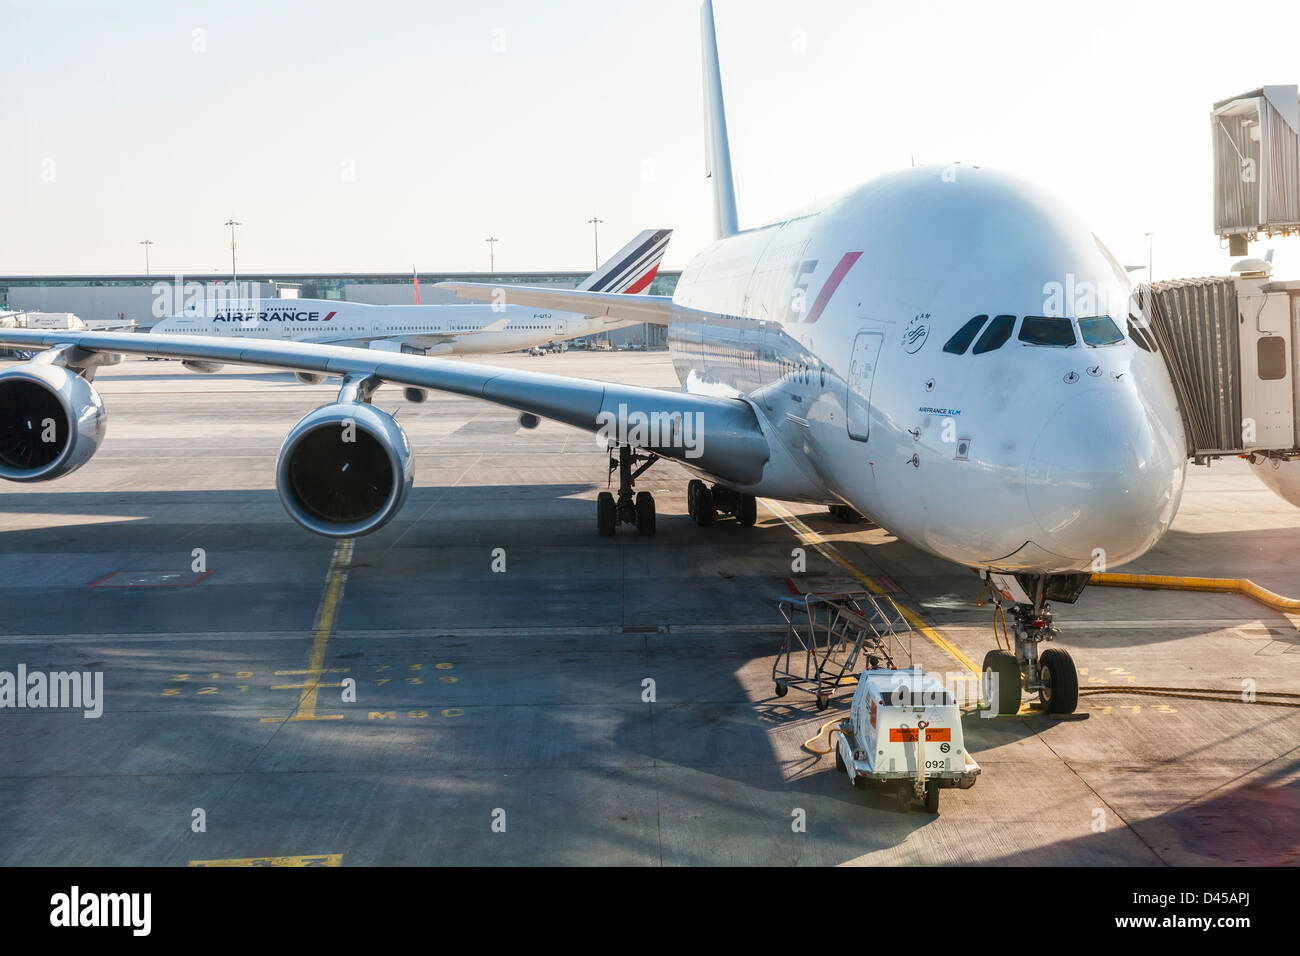 https://c8.alamy.com/comp/D45APJ/air-france-airbus-a380-boeing-747-400-at-charles-de-gaulle-airport-D45APJ.jpg